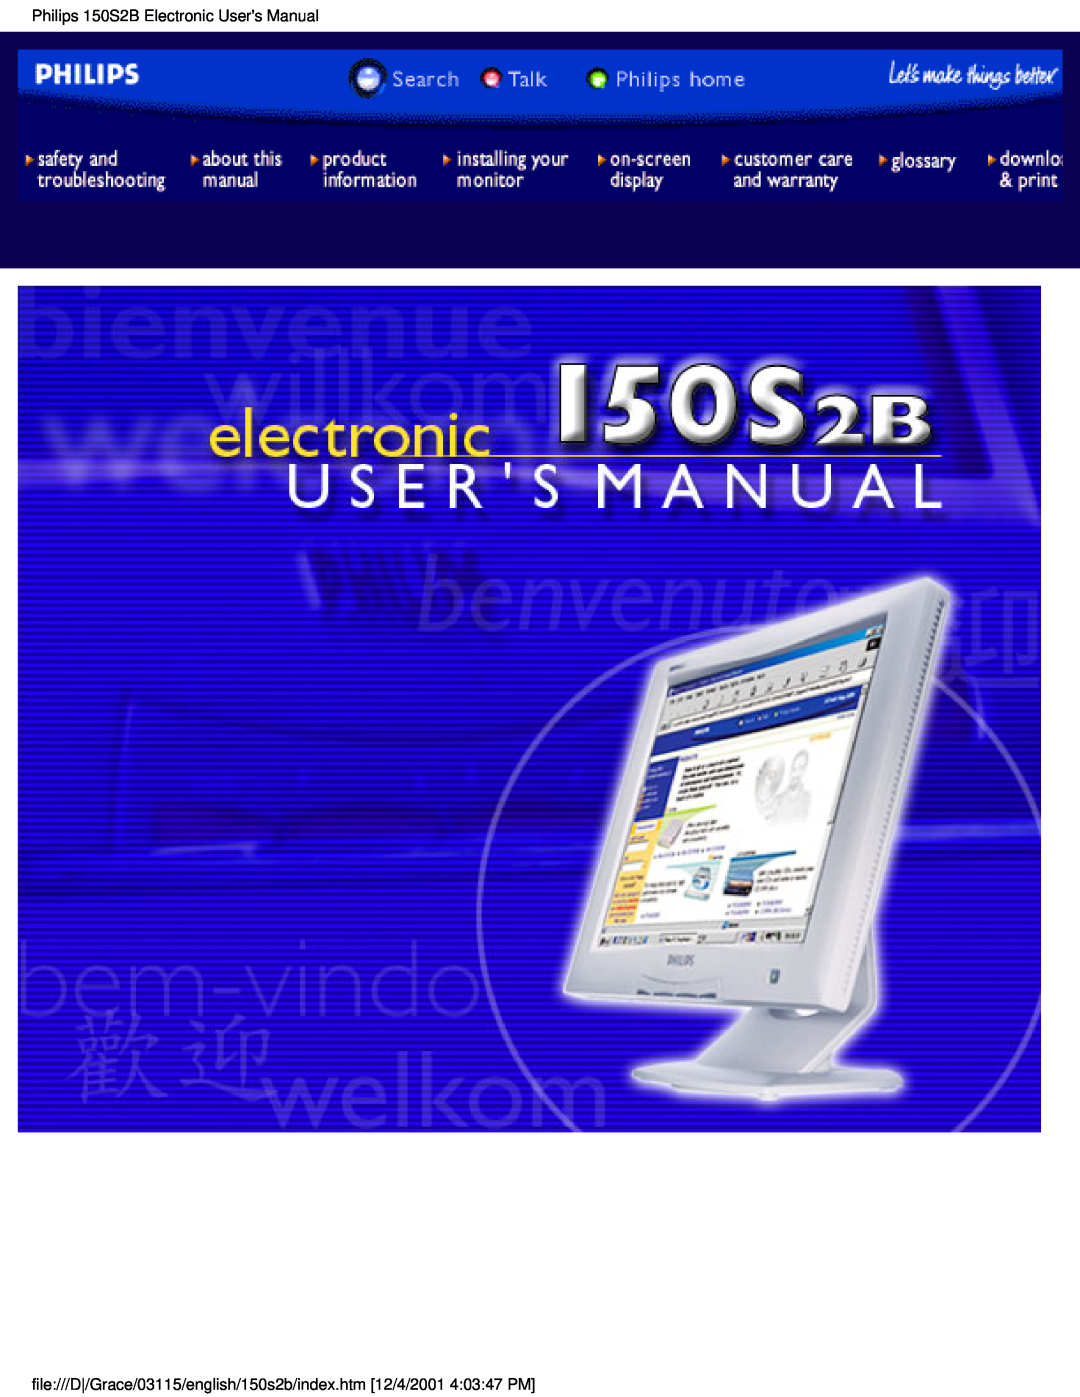 Philips user manual Philips 150S2B Electronic Users Manual 